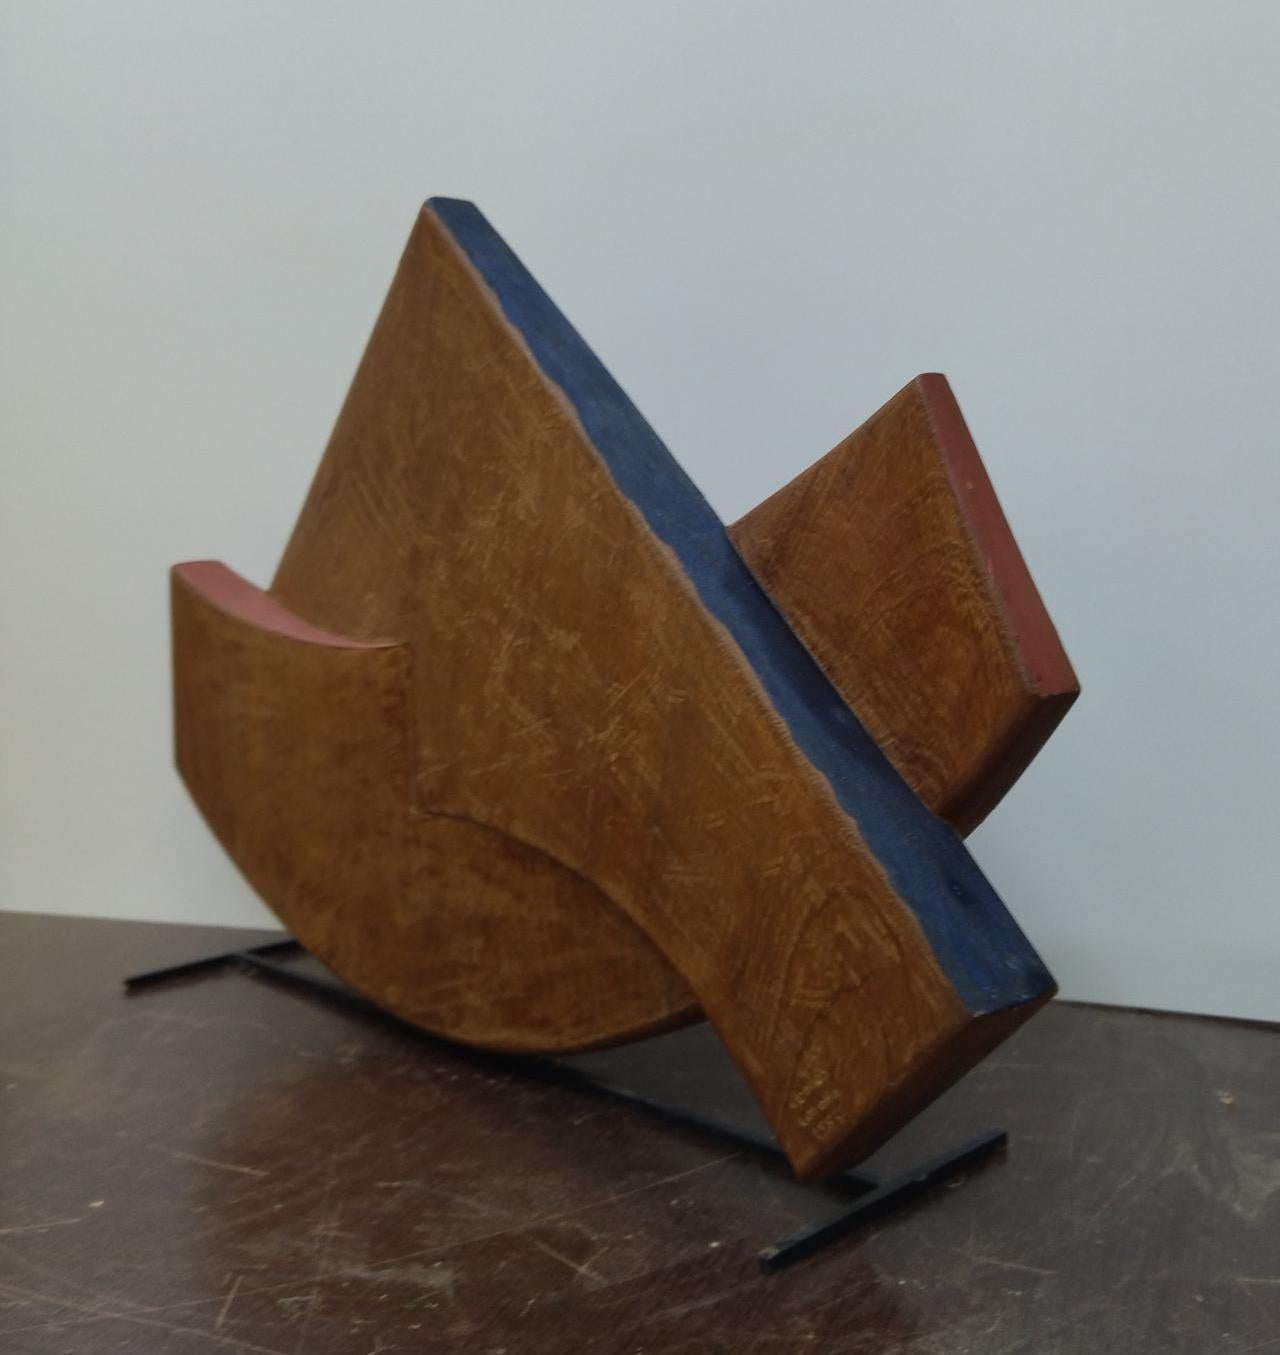  Codina Corona.  Boat   la barca  Original- wood realistic sculpture- - Contemporary Sculpture by Josep Maria Codina Corona